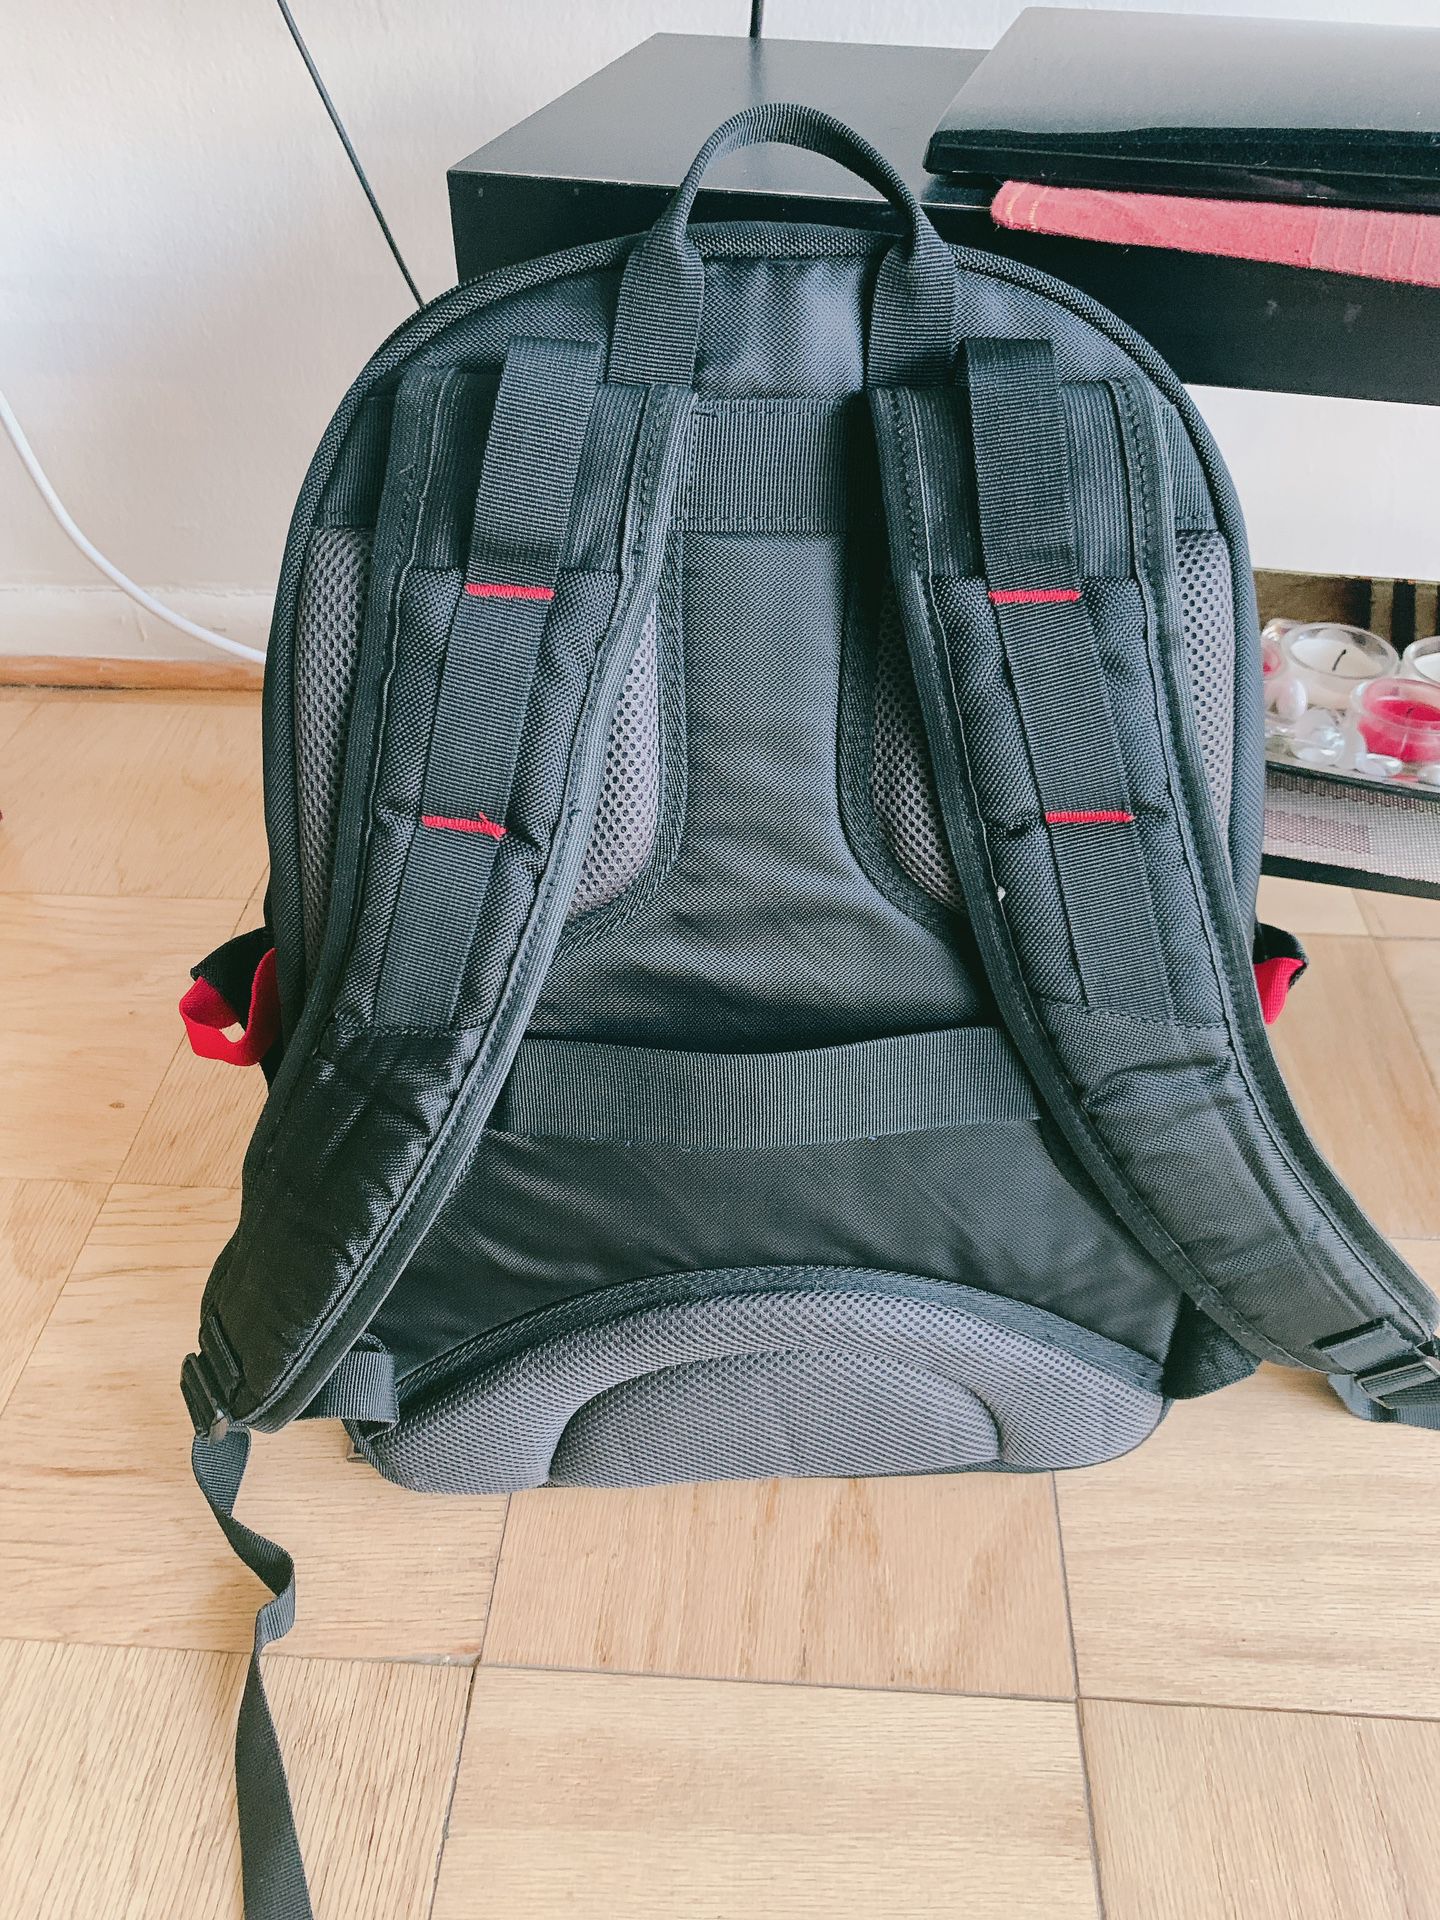 Samsonite Laptop Backpack, 17”